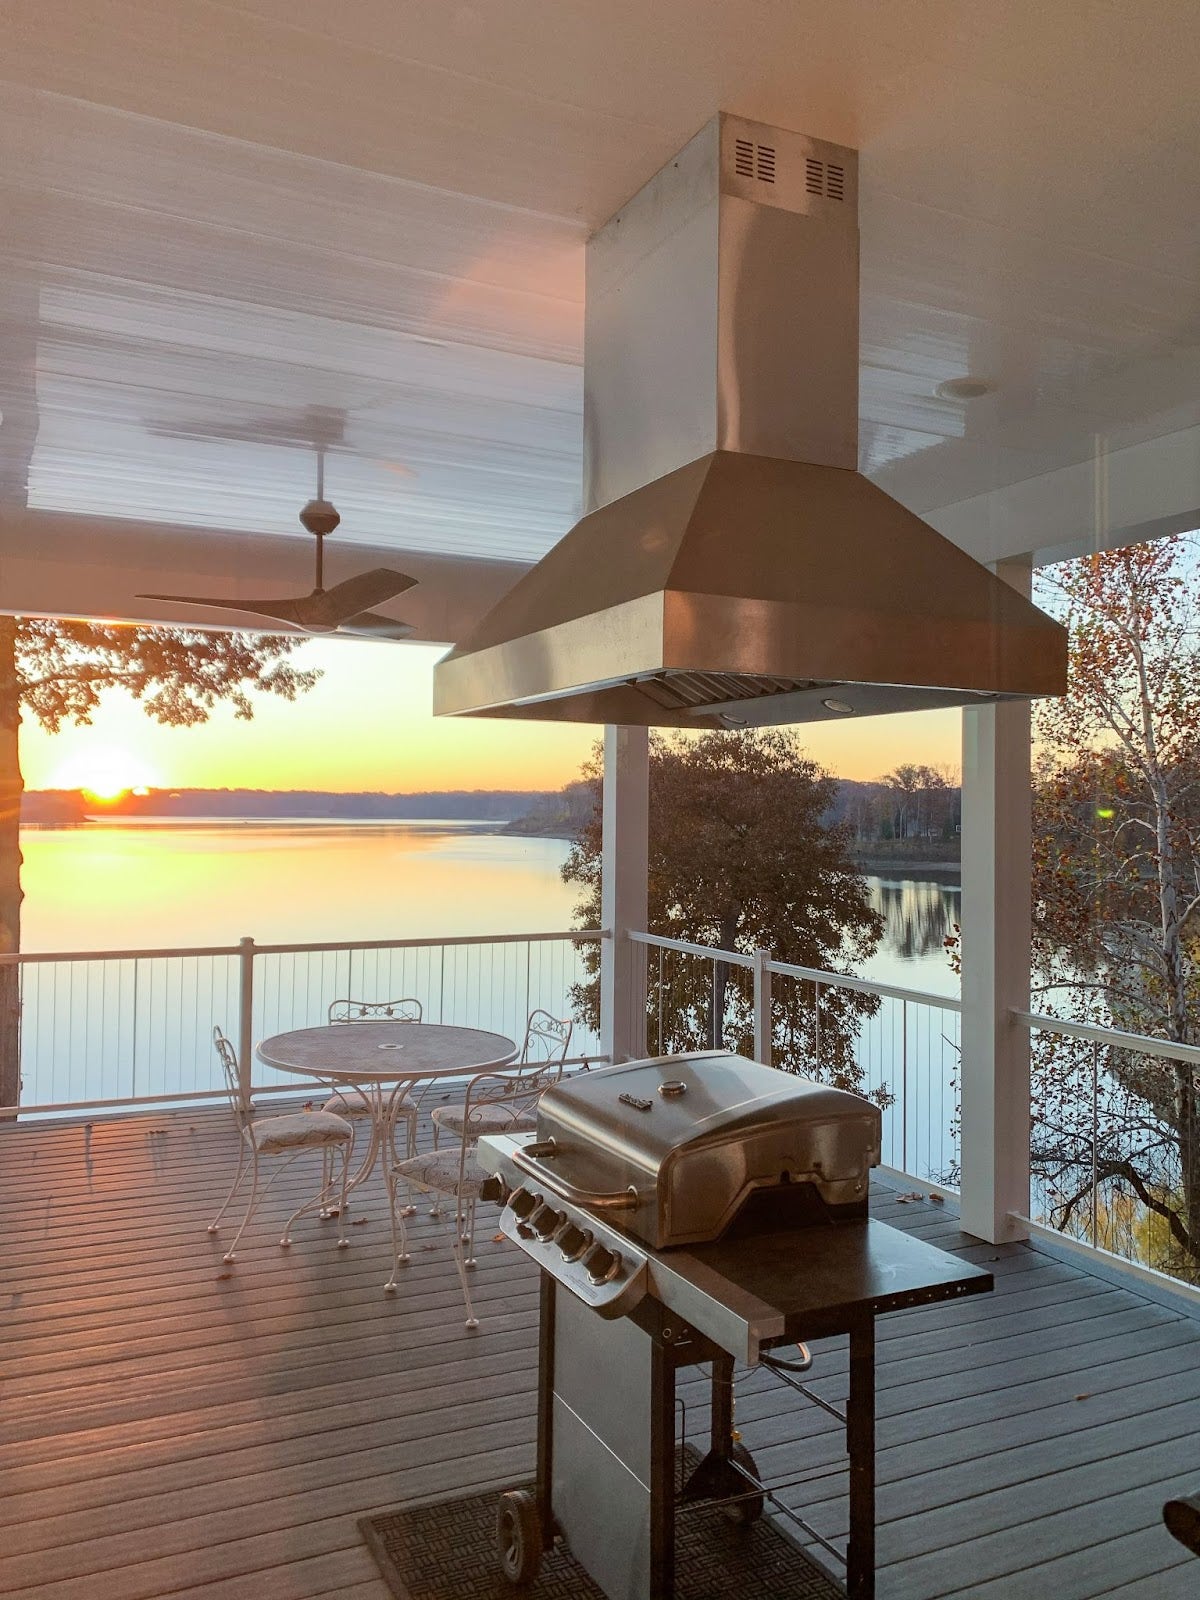 Serene deck kitchen with modern grilling amenities overlooking a tranquil lake at dusk. - Proline Range Hoods - prolinerangehoods.com 
